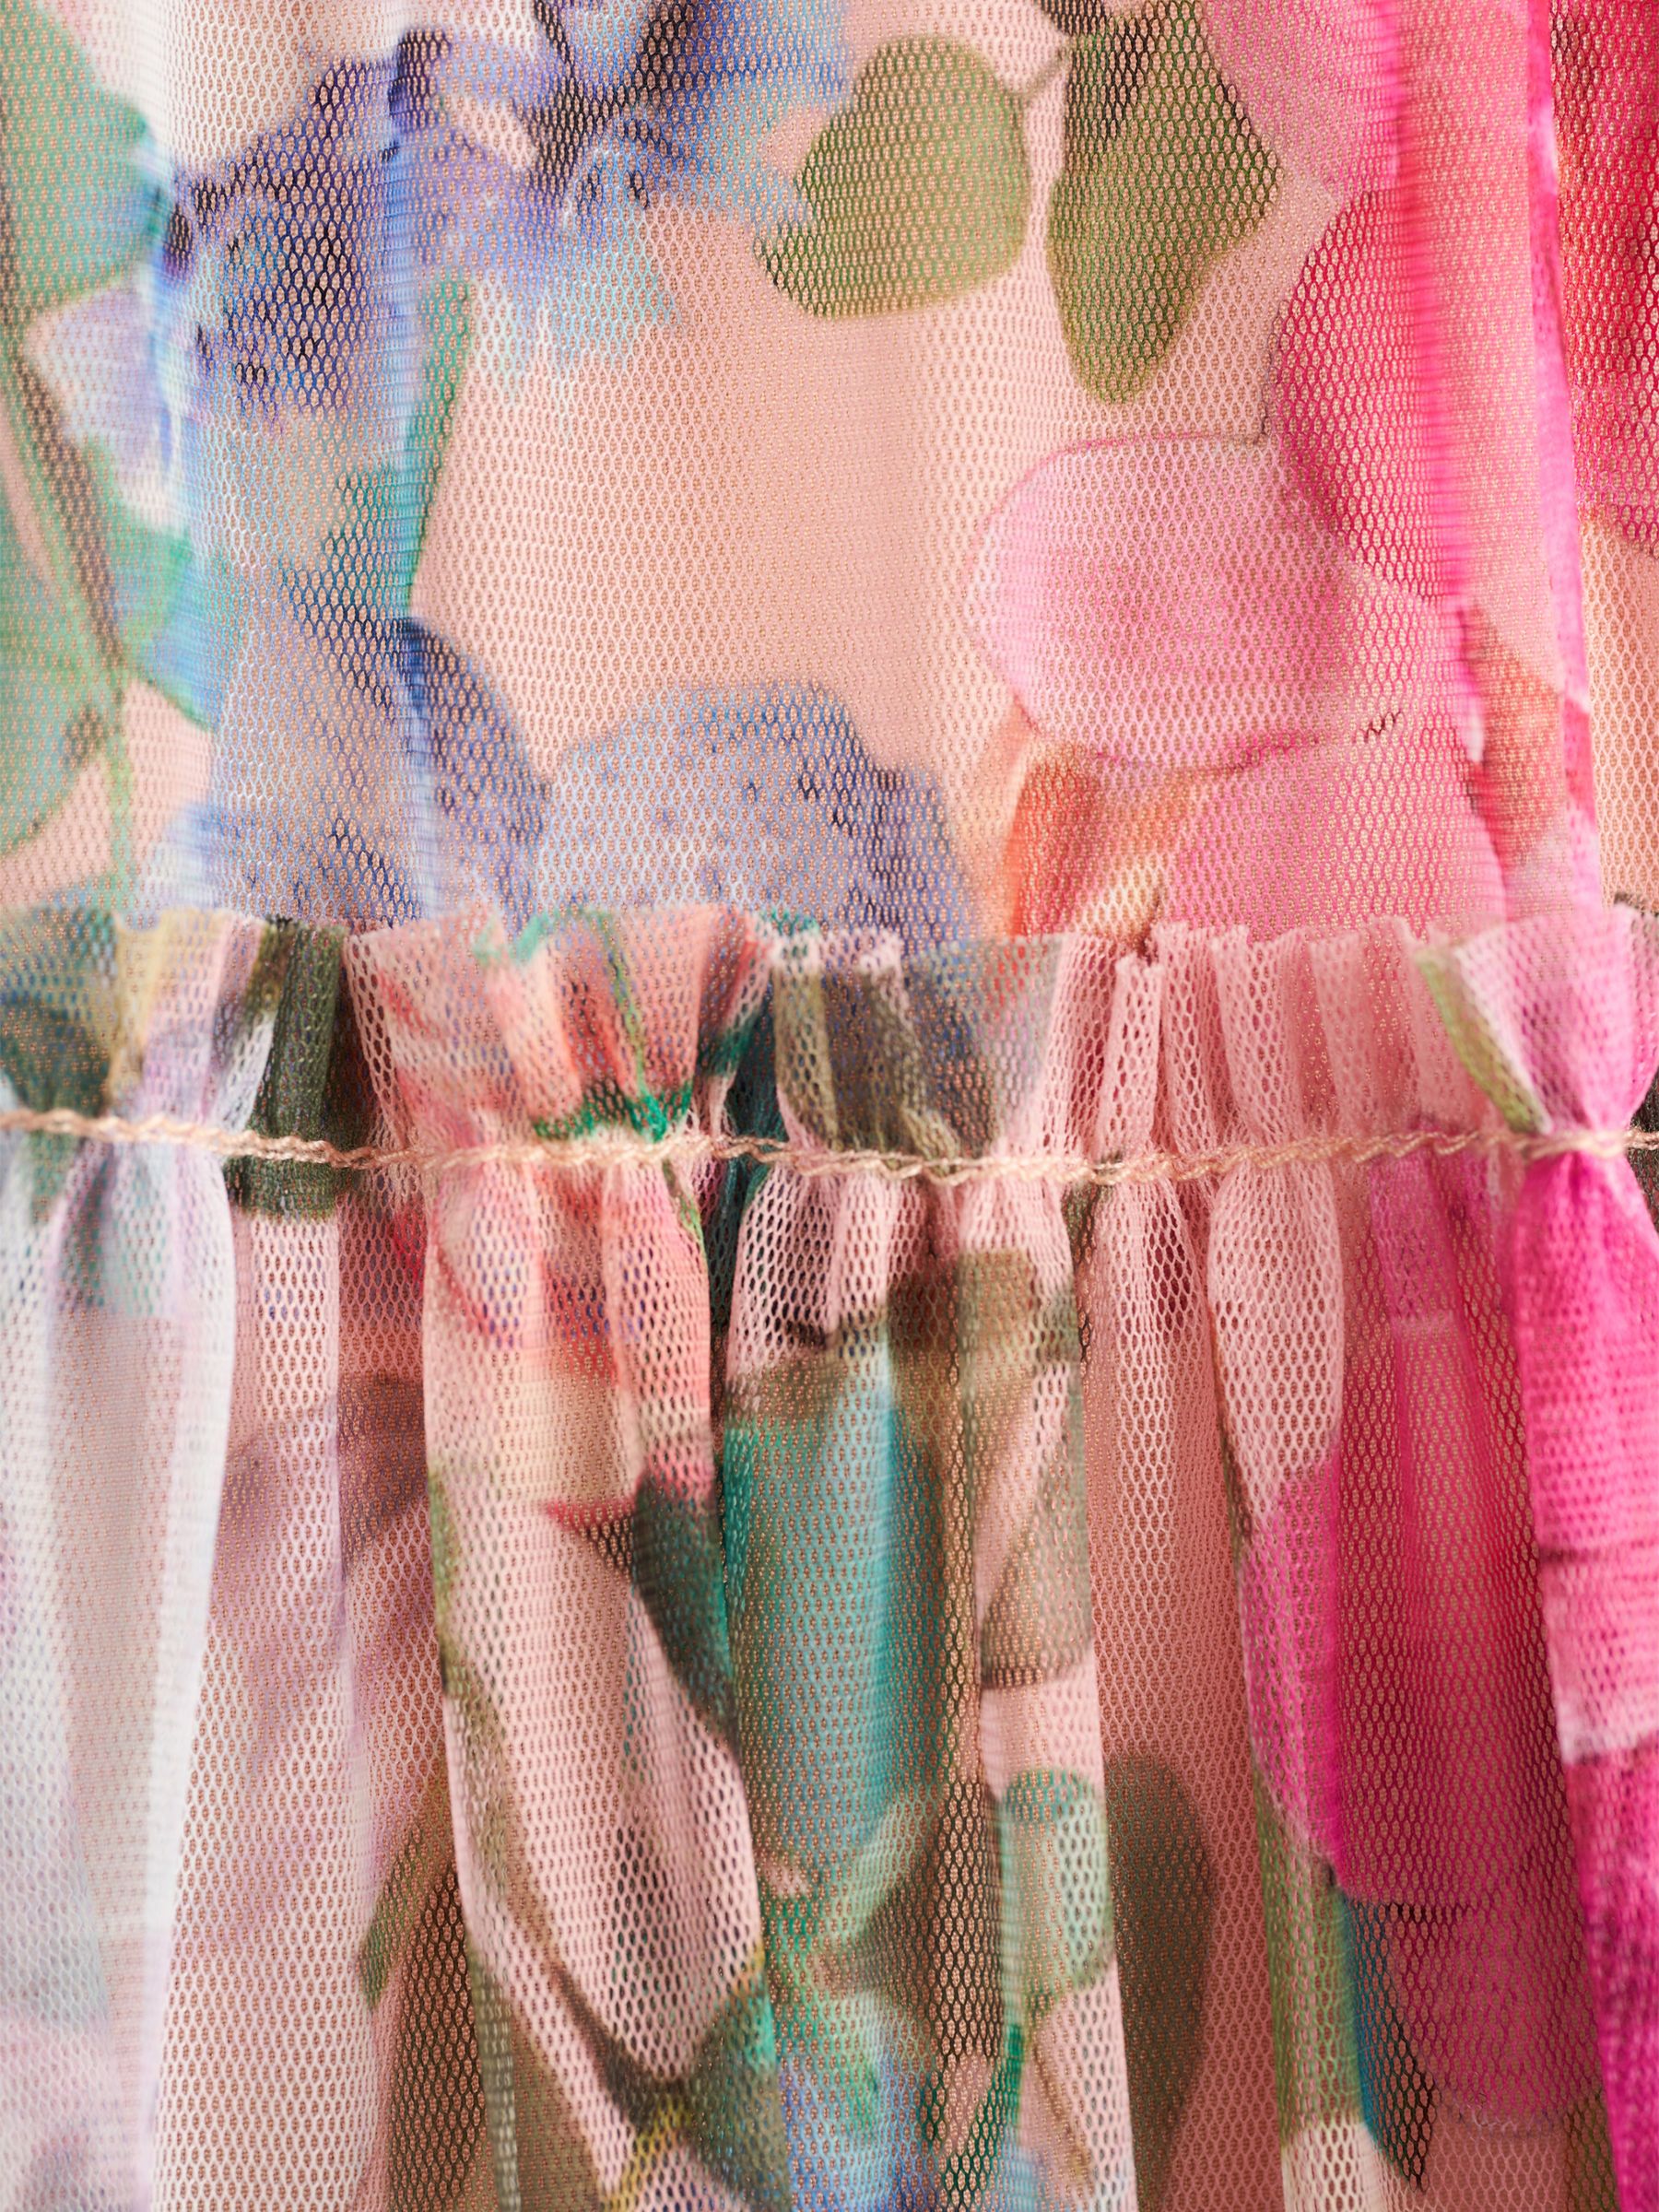 Angel & Rocket Kids' Eleanor Mesh Ruffle Dress, Pink/Multi, 2 years